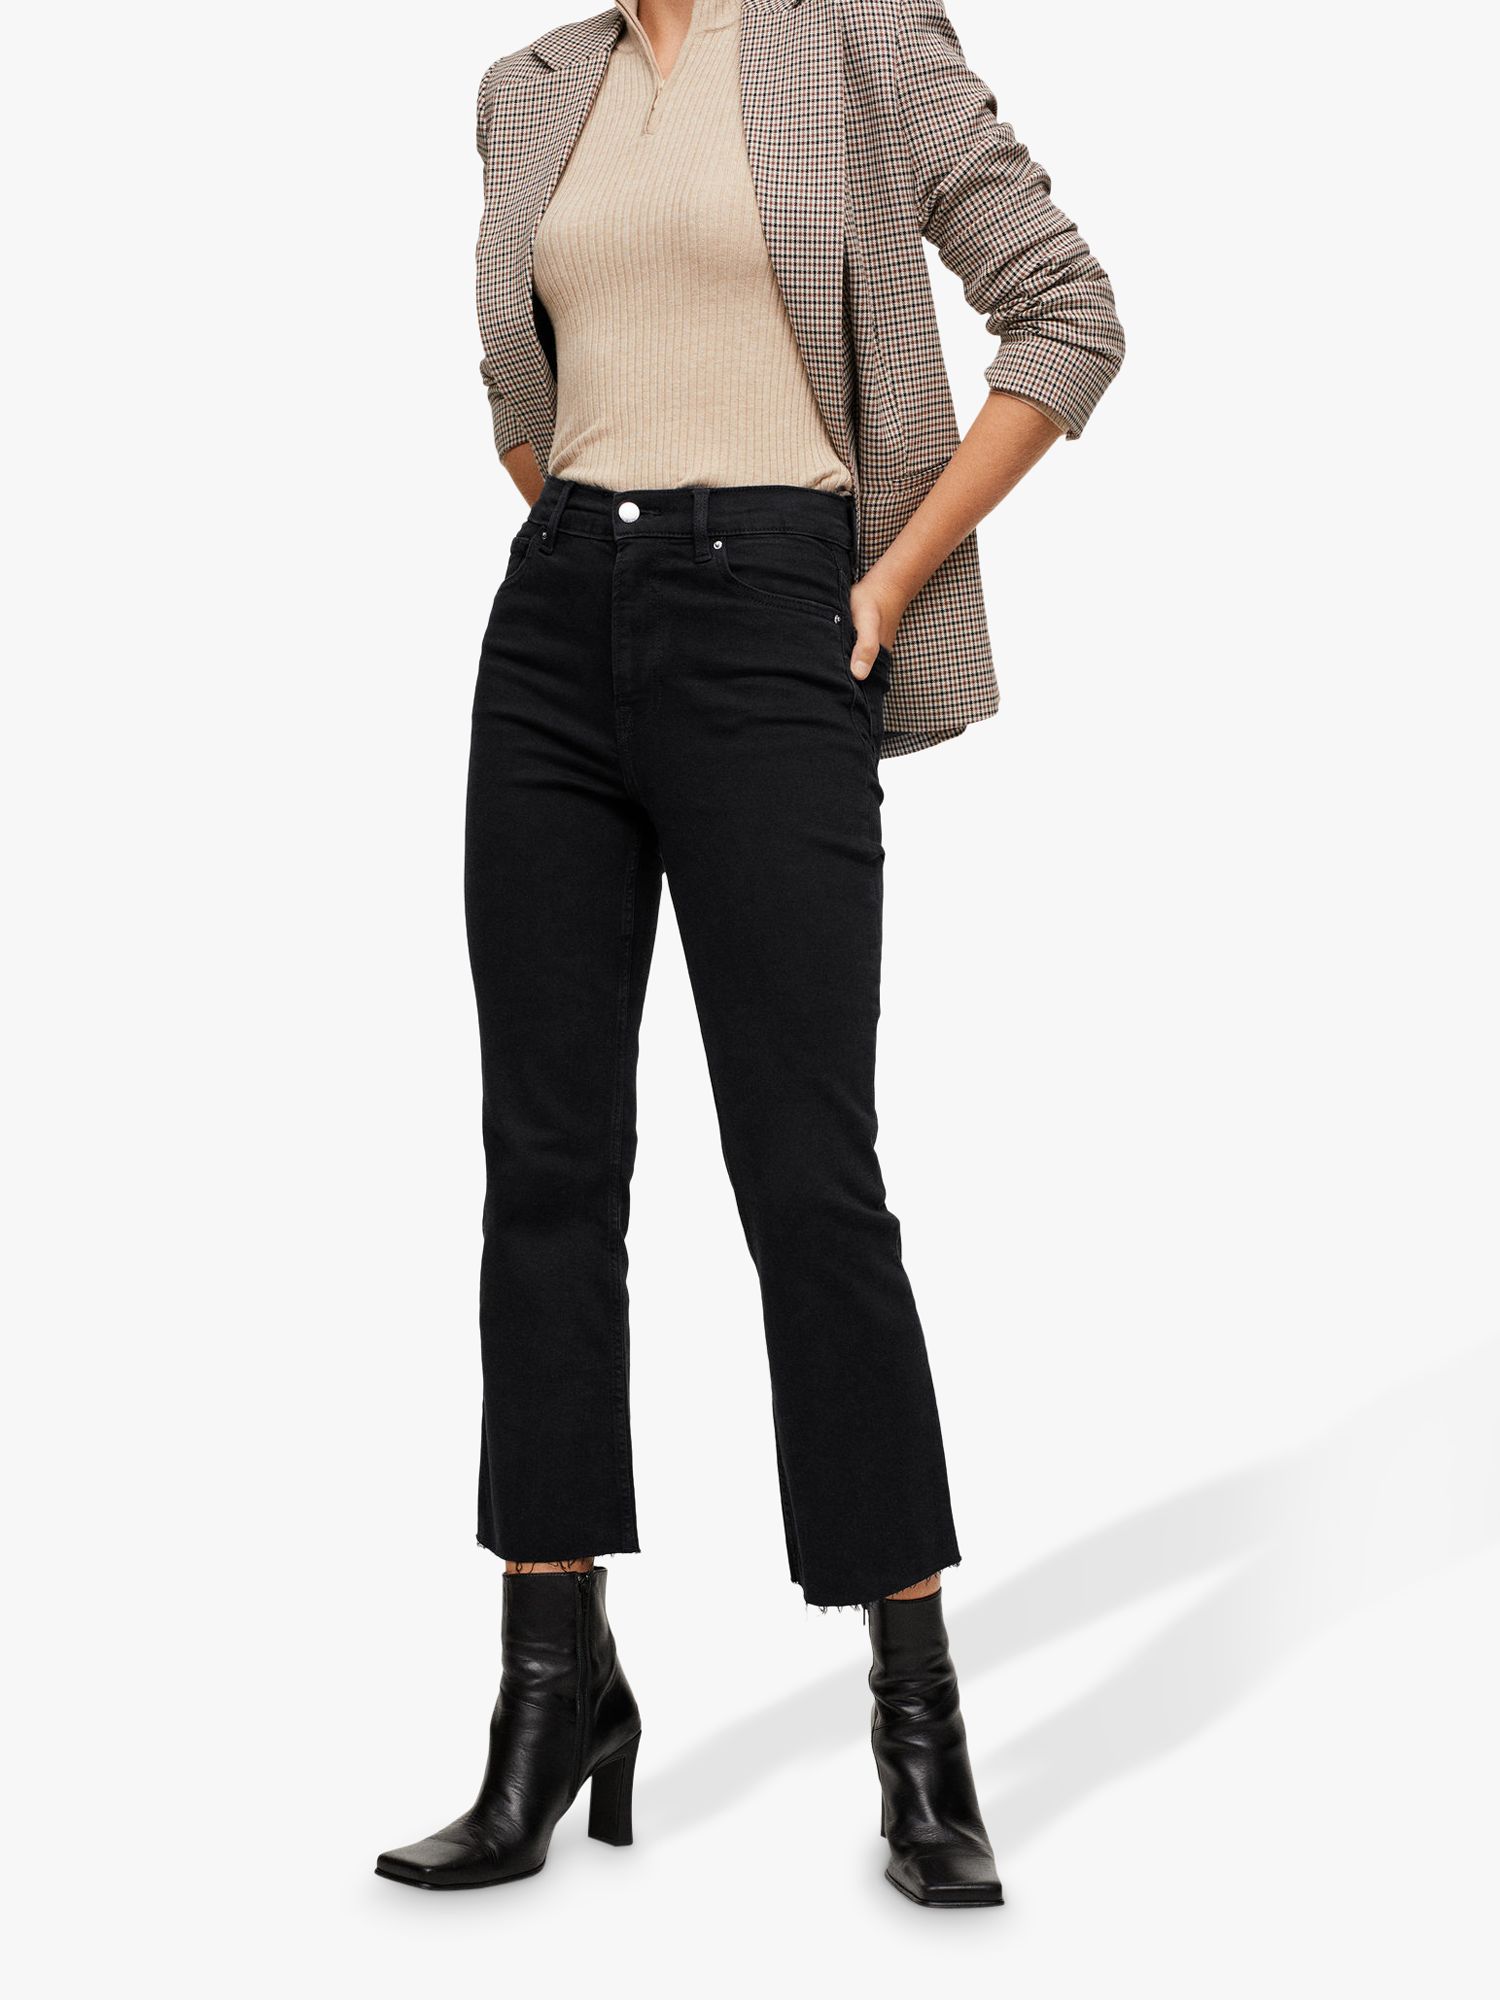 Mango Sienna Cropped Jeans, Black at John Lewis & Partners